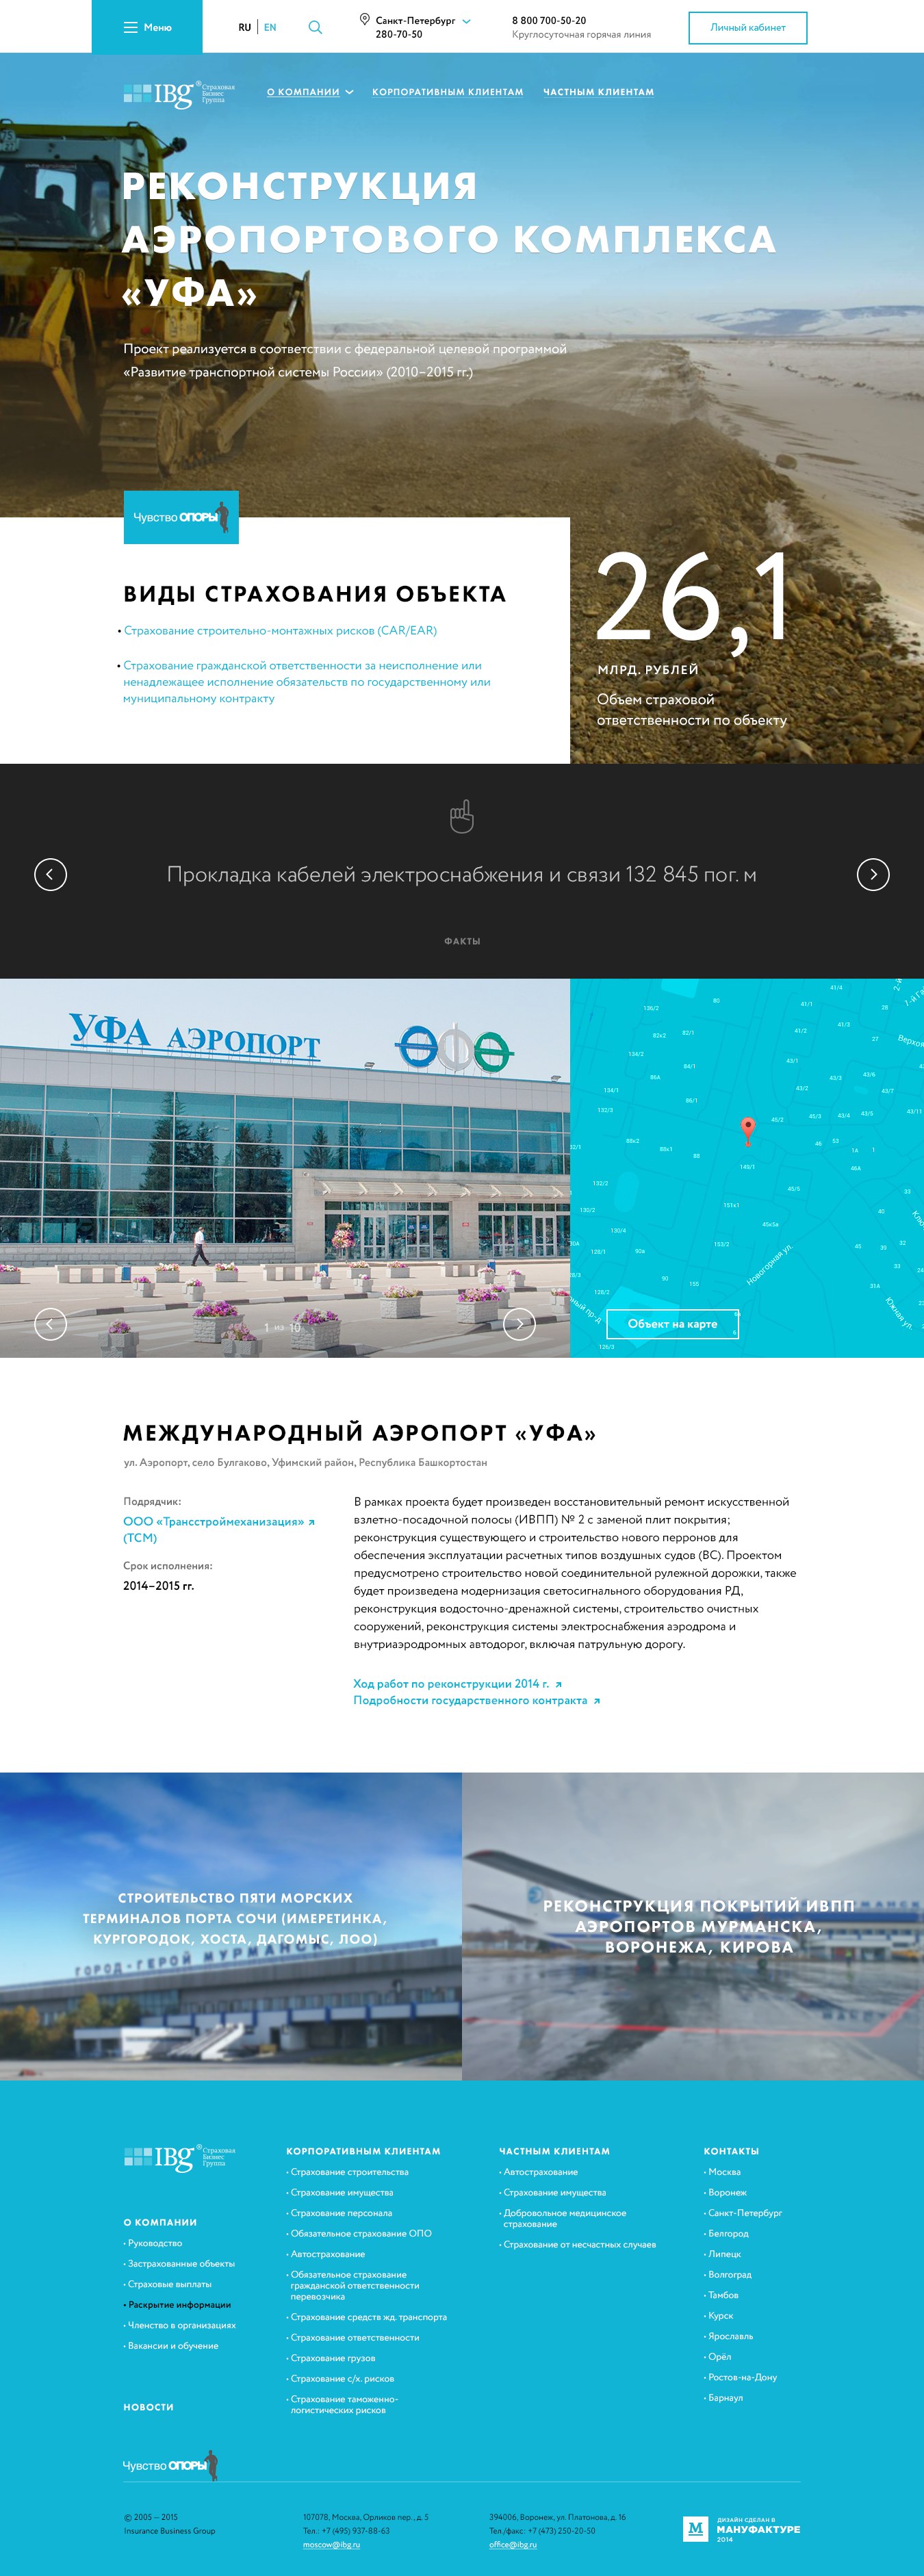 Страница объекта на примере аэропортового комплекса «Уфа».